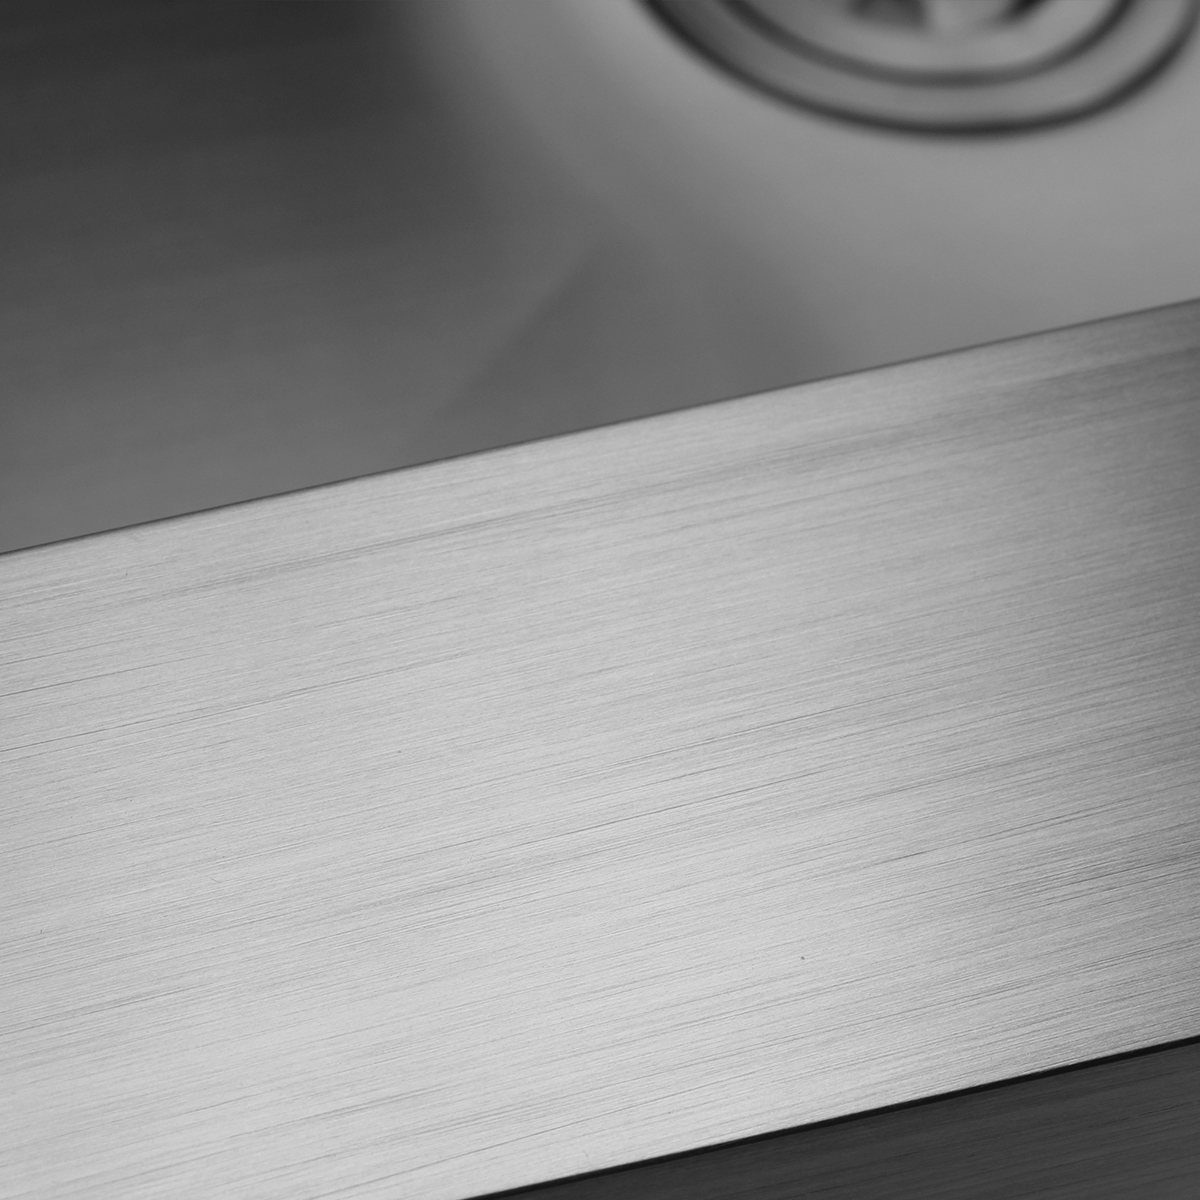 Fregadero de cocina nano PVD de acero inoxidable 304 de calibre 18 hecho a mano con rejilla inferior